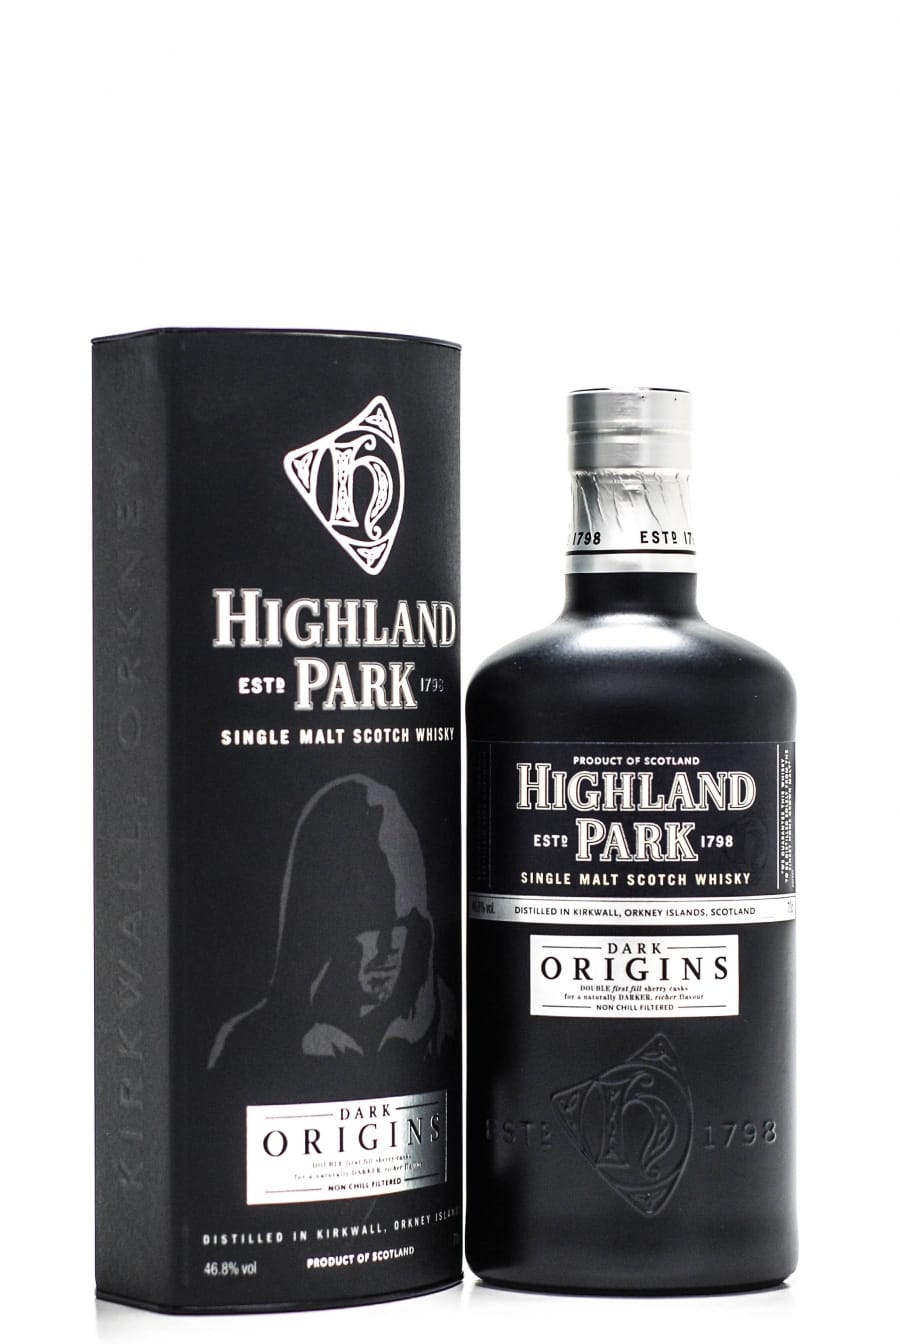 Highland Park - Dark Origins 46.8% NAS